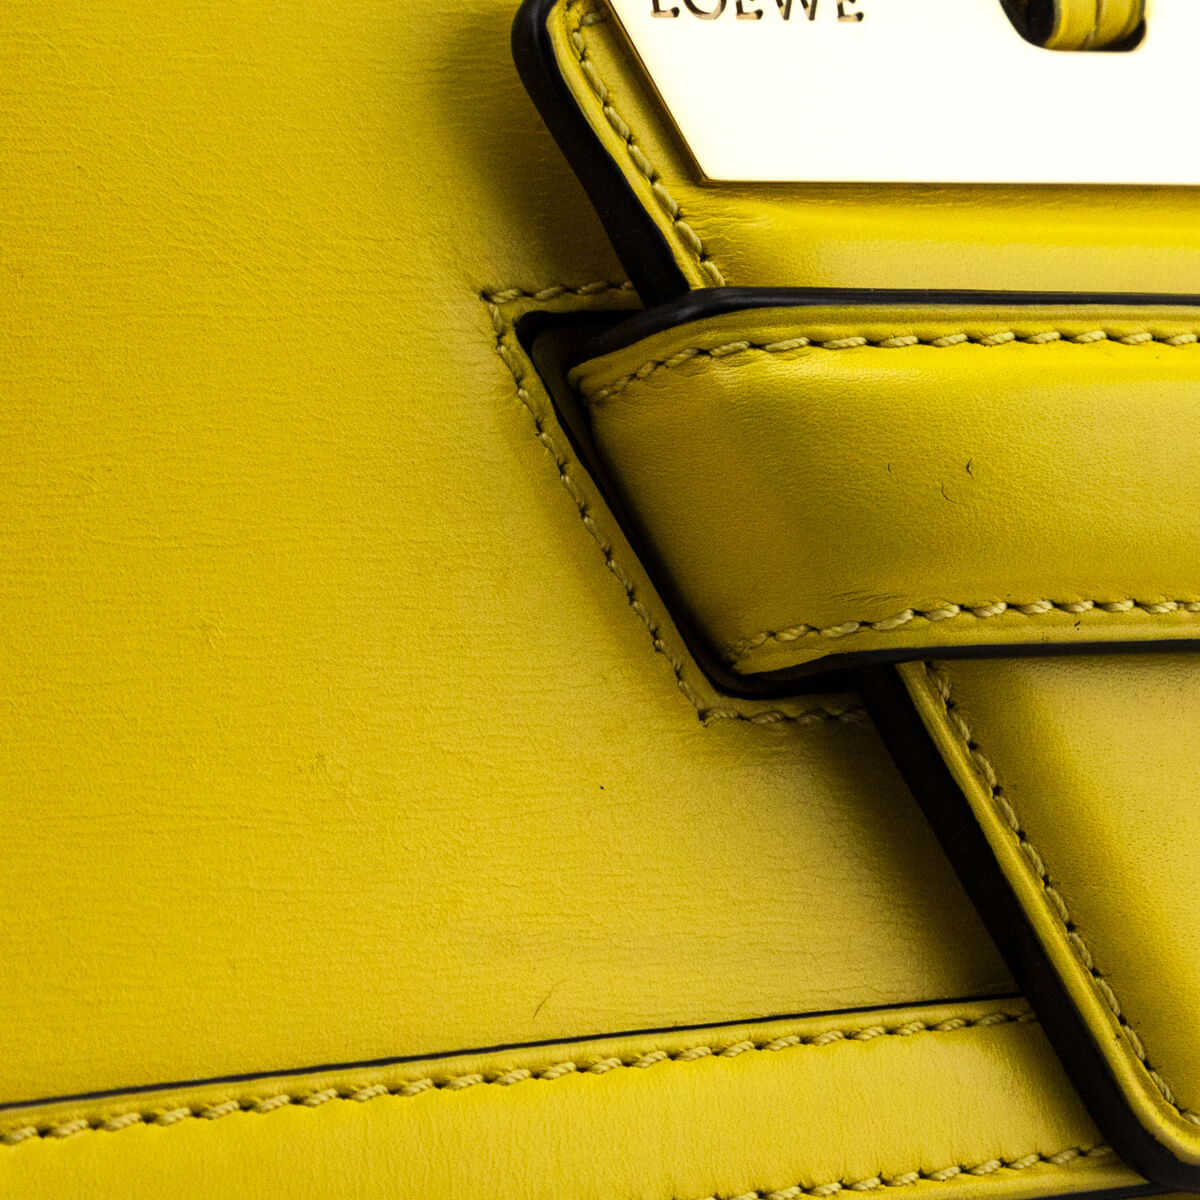 Loewe Bright Yellow Box Calfskin Medium Barcelona Bag - Love that Bag etc - Preowned Authentic Designer Handbags & Preloved Fashions